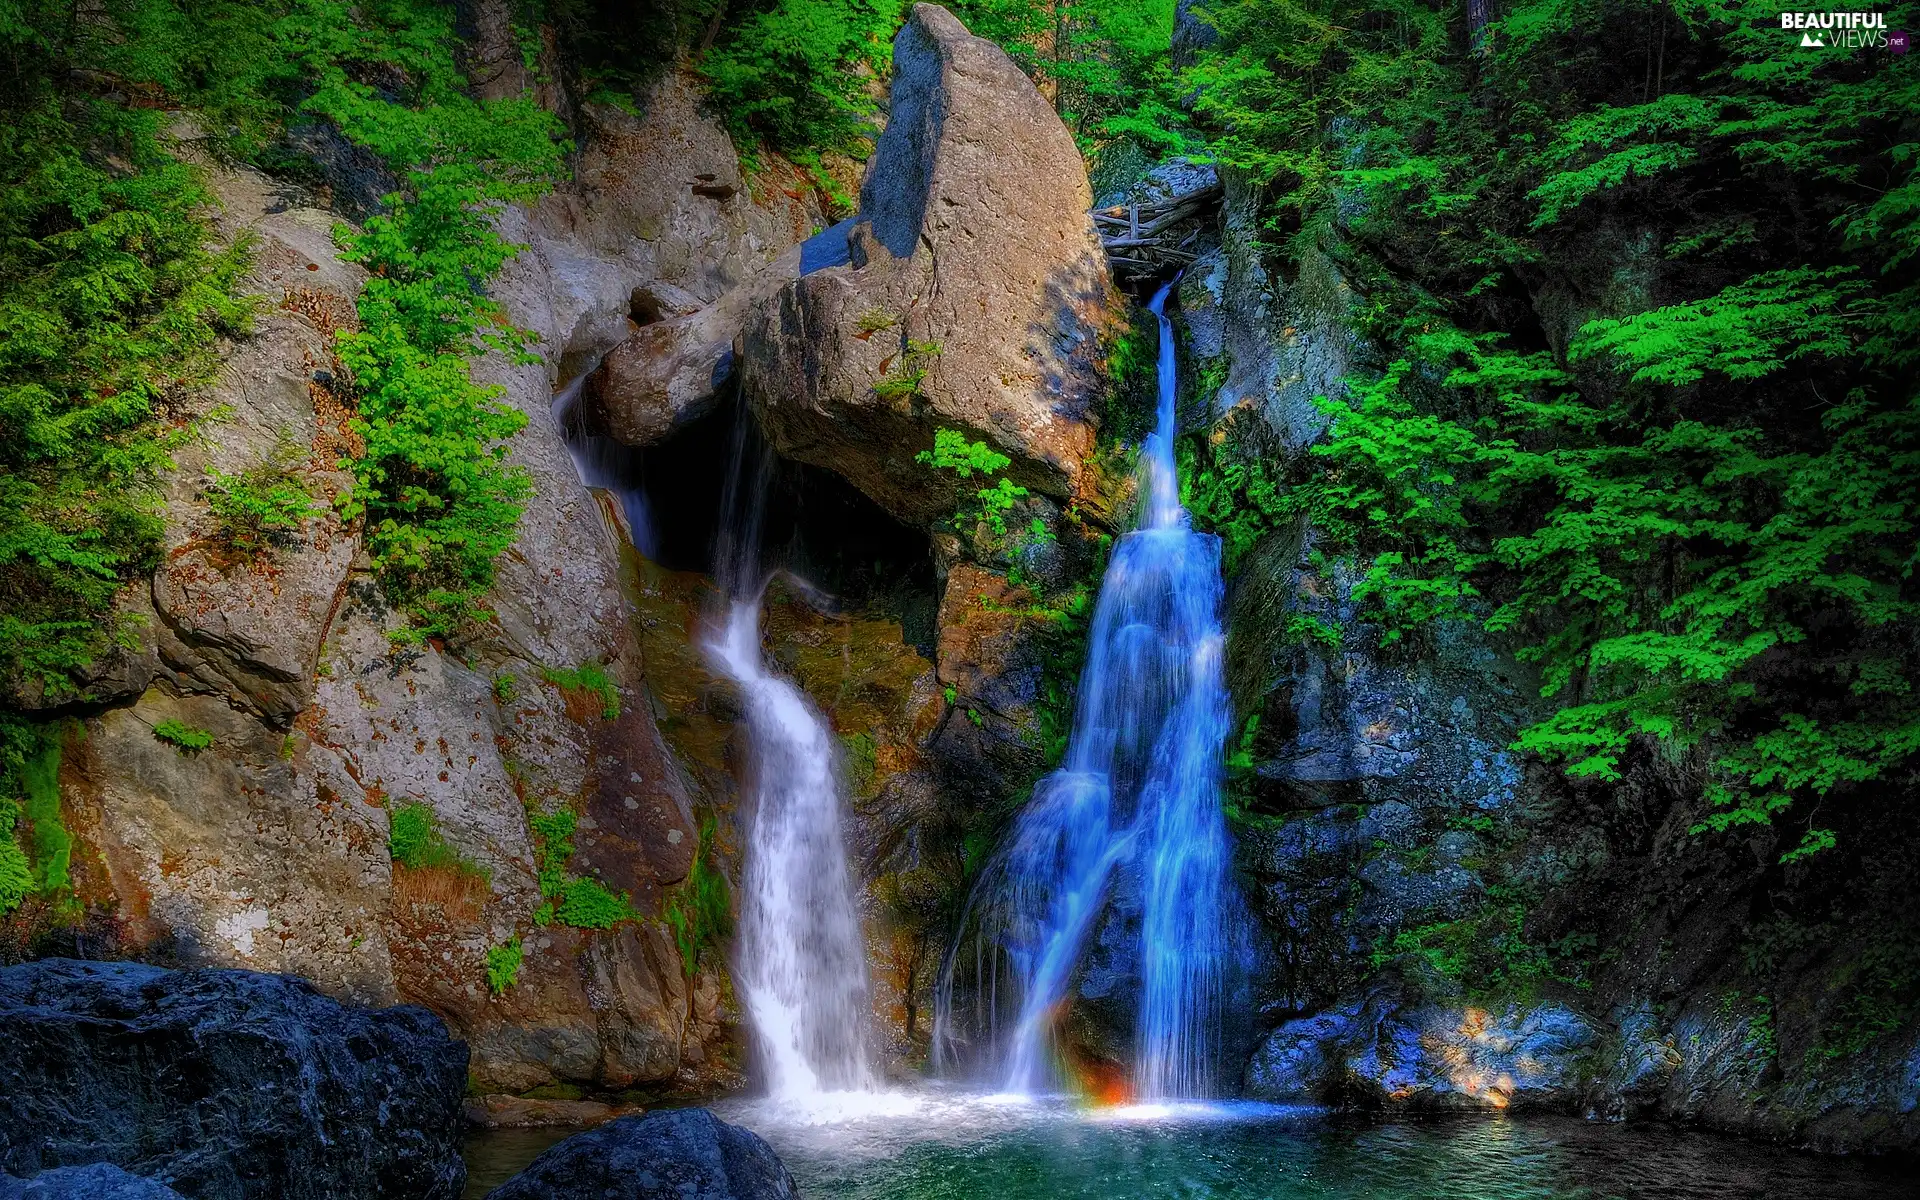 VEGETATION, waterfall, rocks